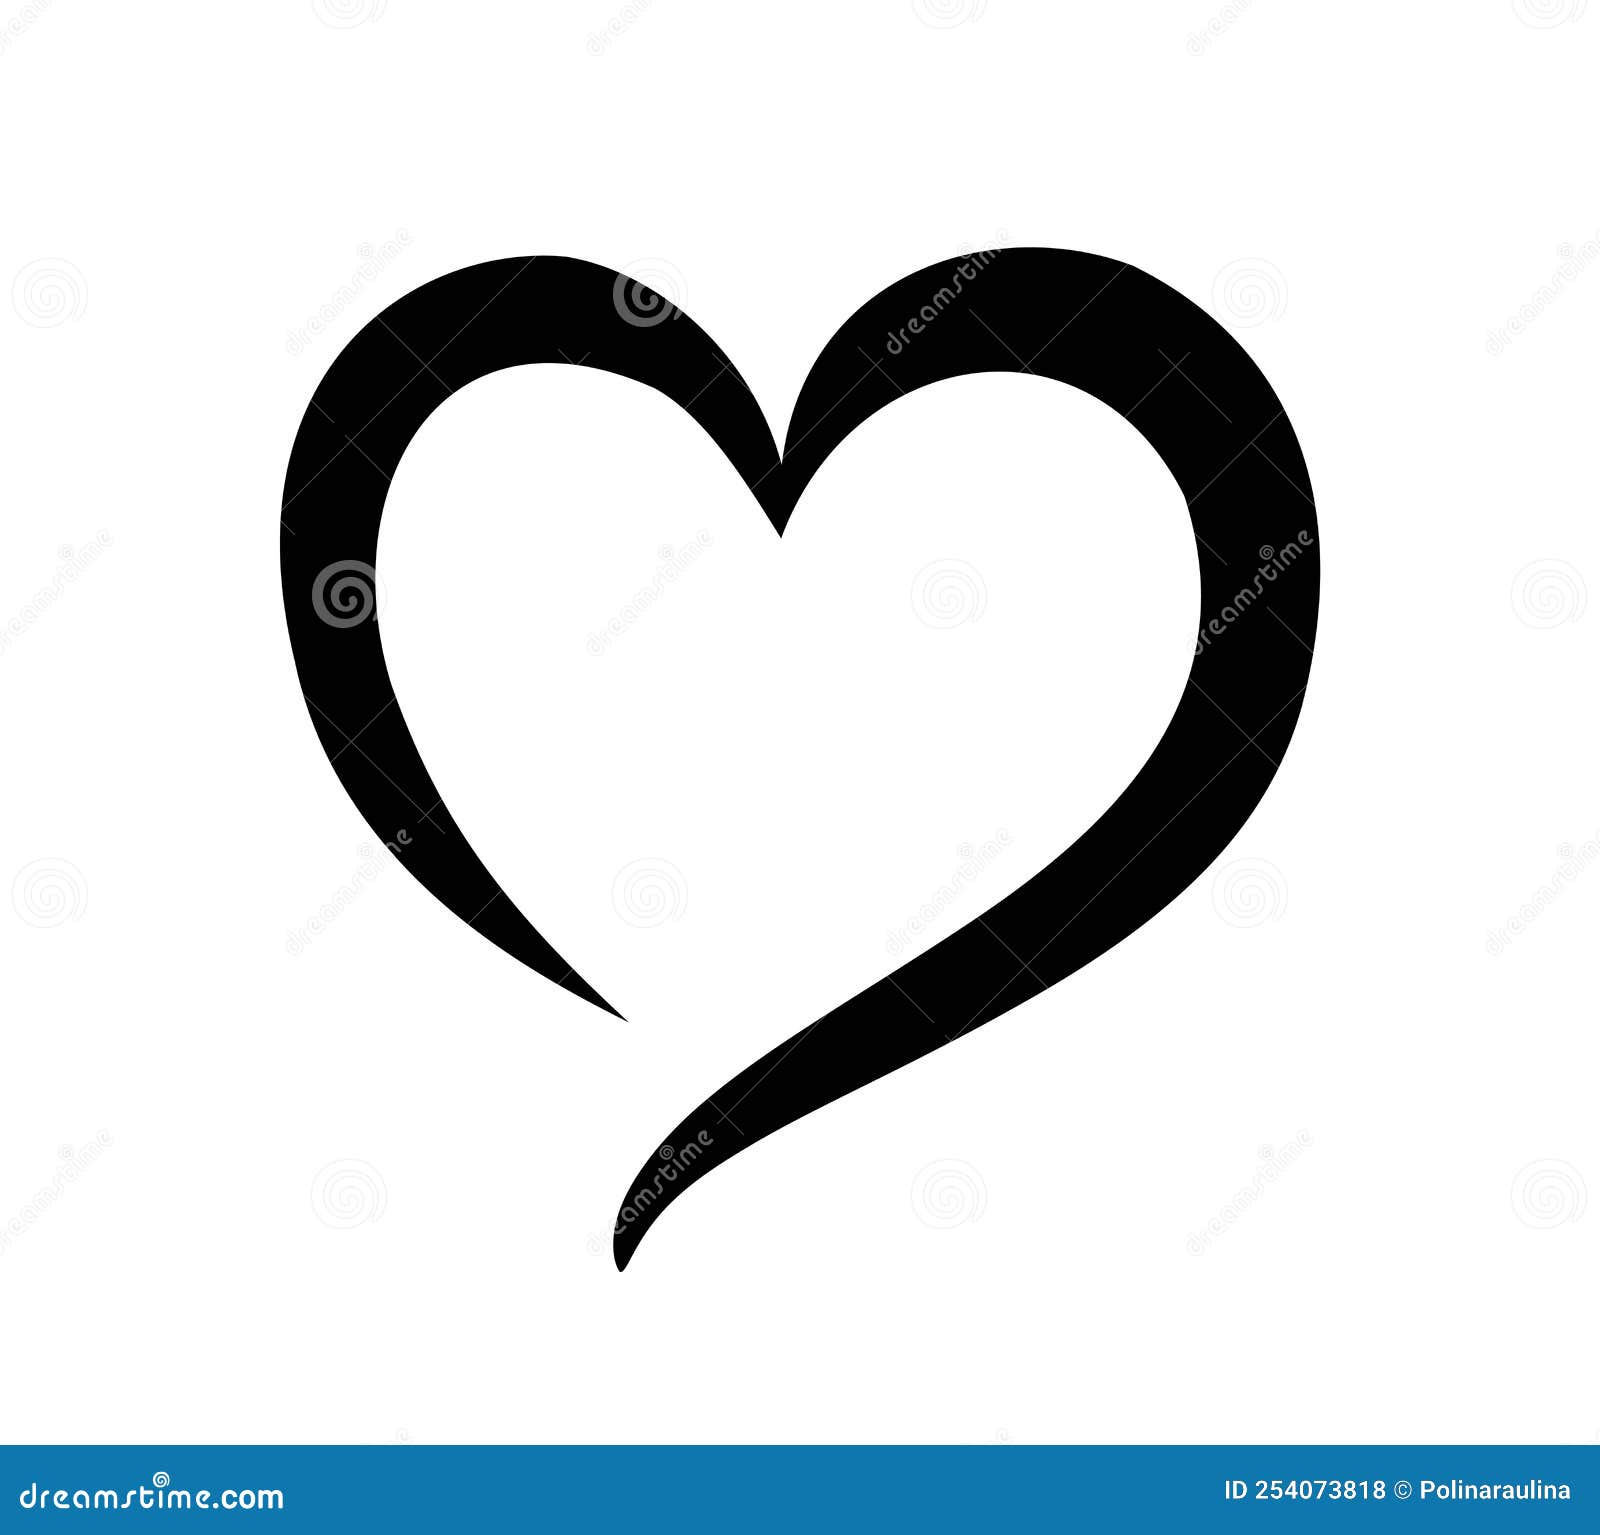 720 Black Heart Tattoo Designs Silhouettes Illustrations RoyaltyFree  Vector Graphics  Clip Art  iStock